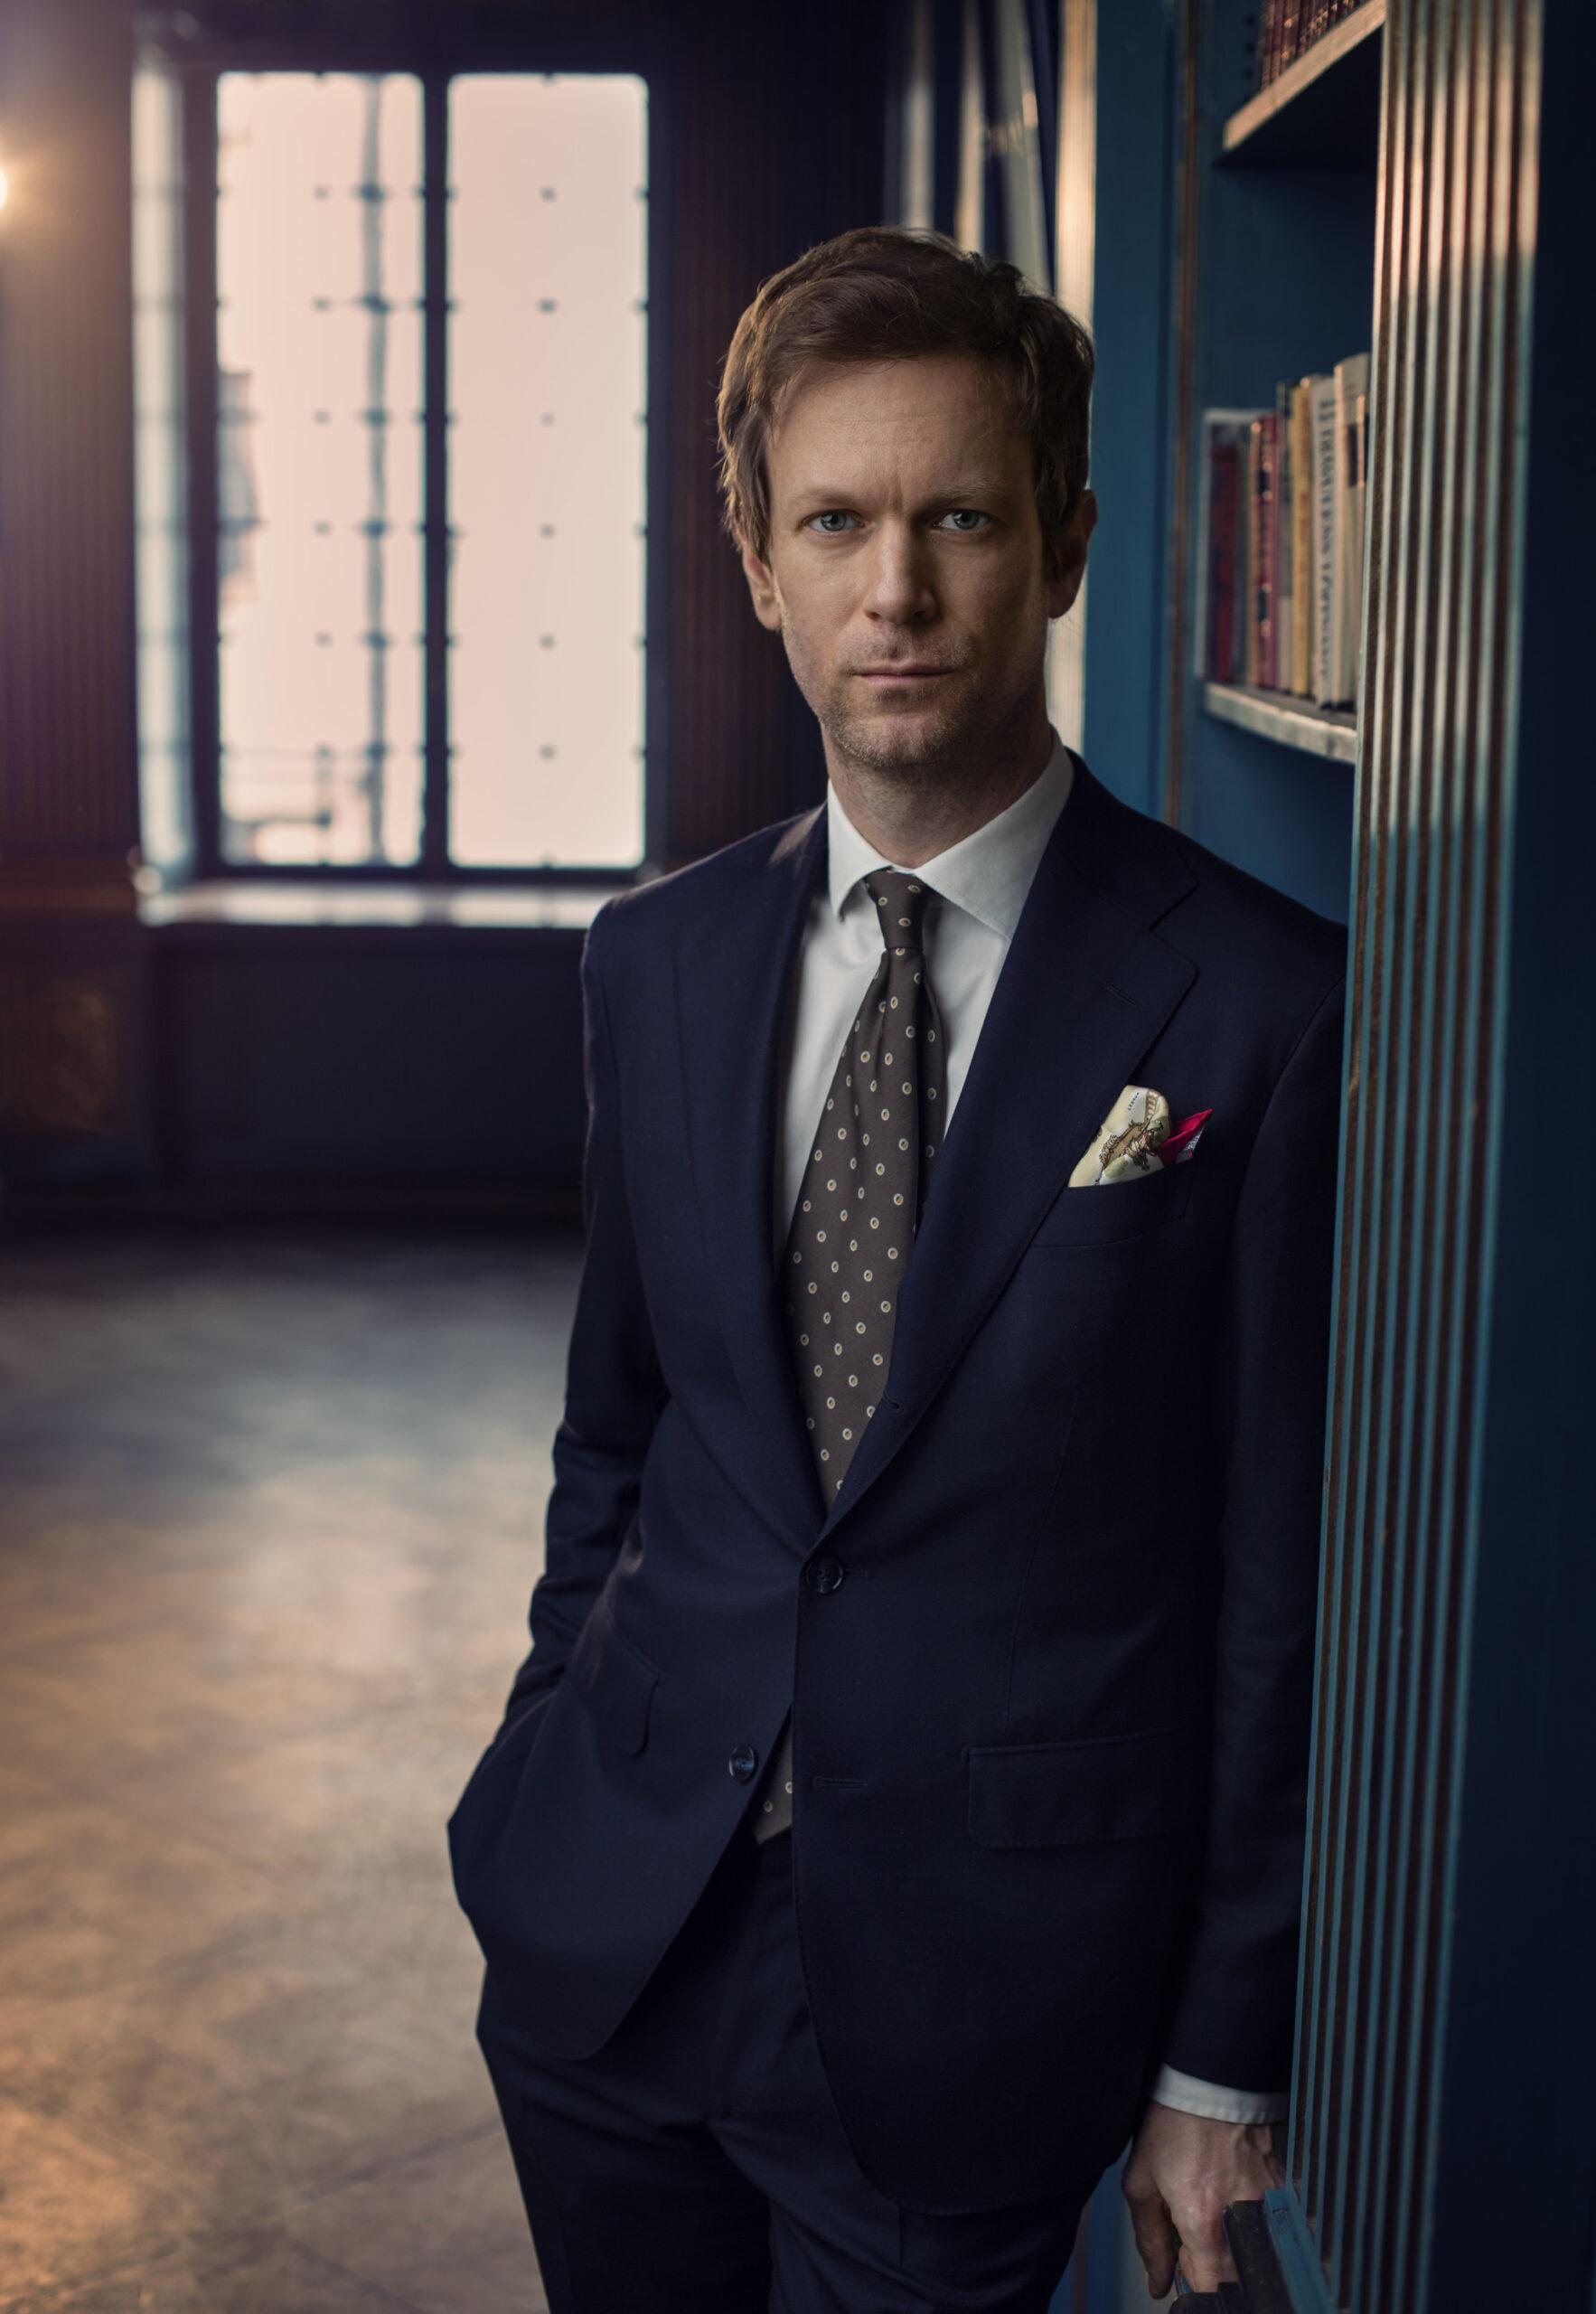 A portrait of Niklas Natt och Dag, a man in a suit leans against a bookshelf.